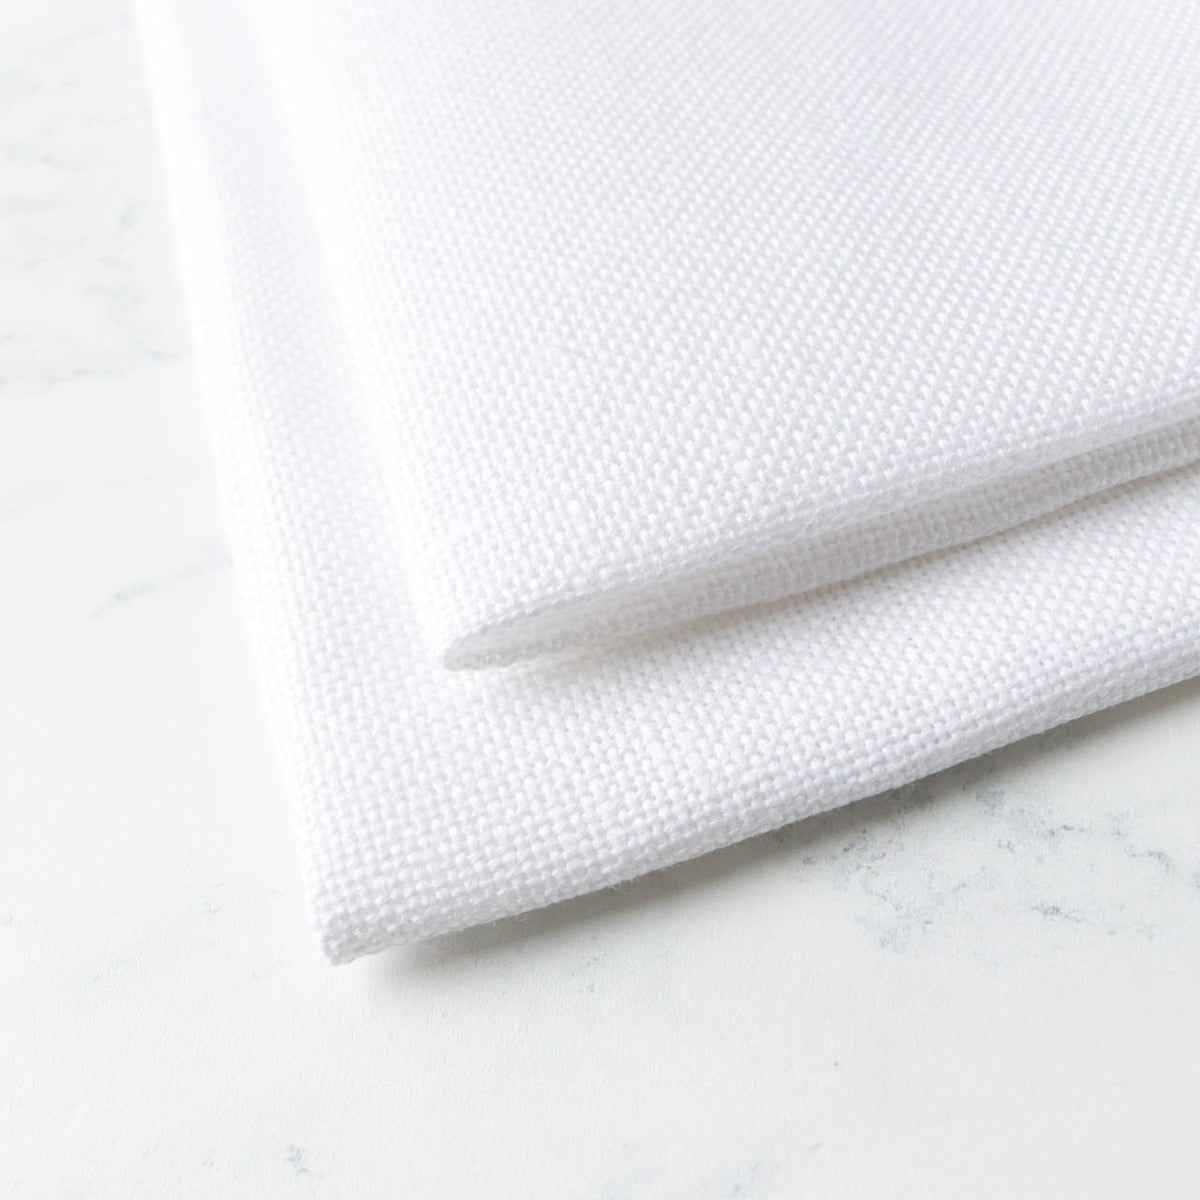 20-count Cork Linen Cross Stitch Fabric - White